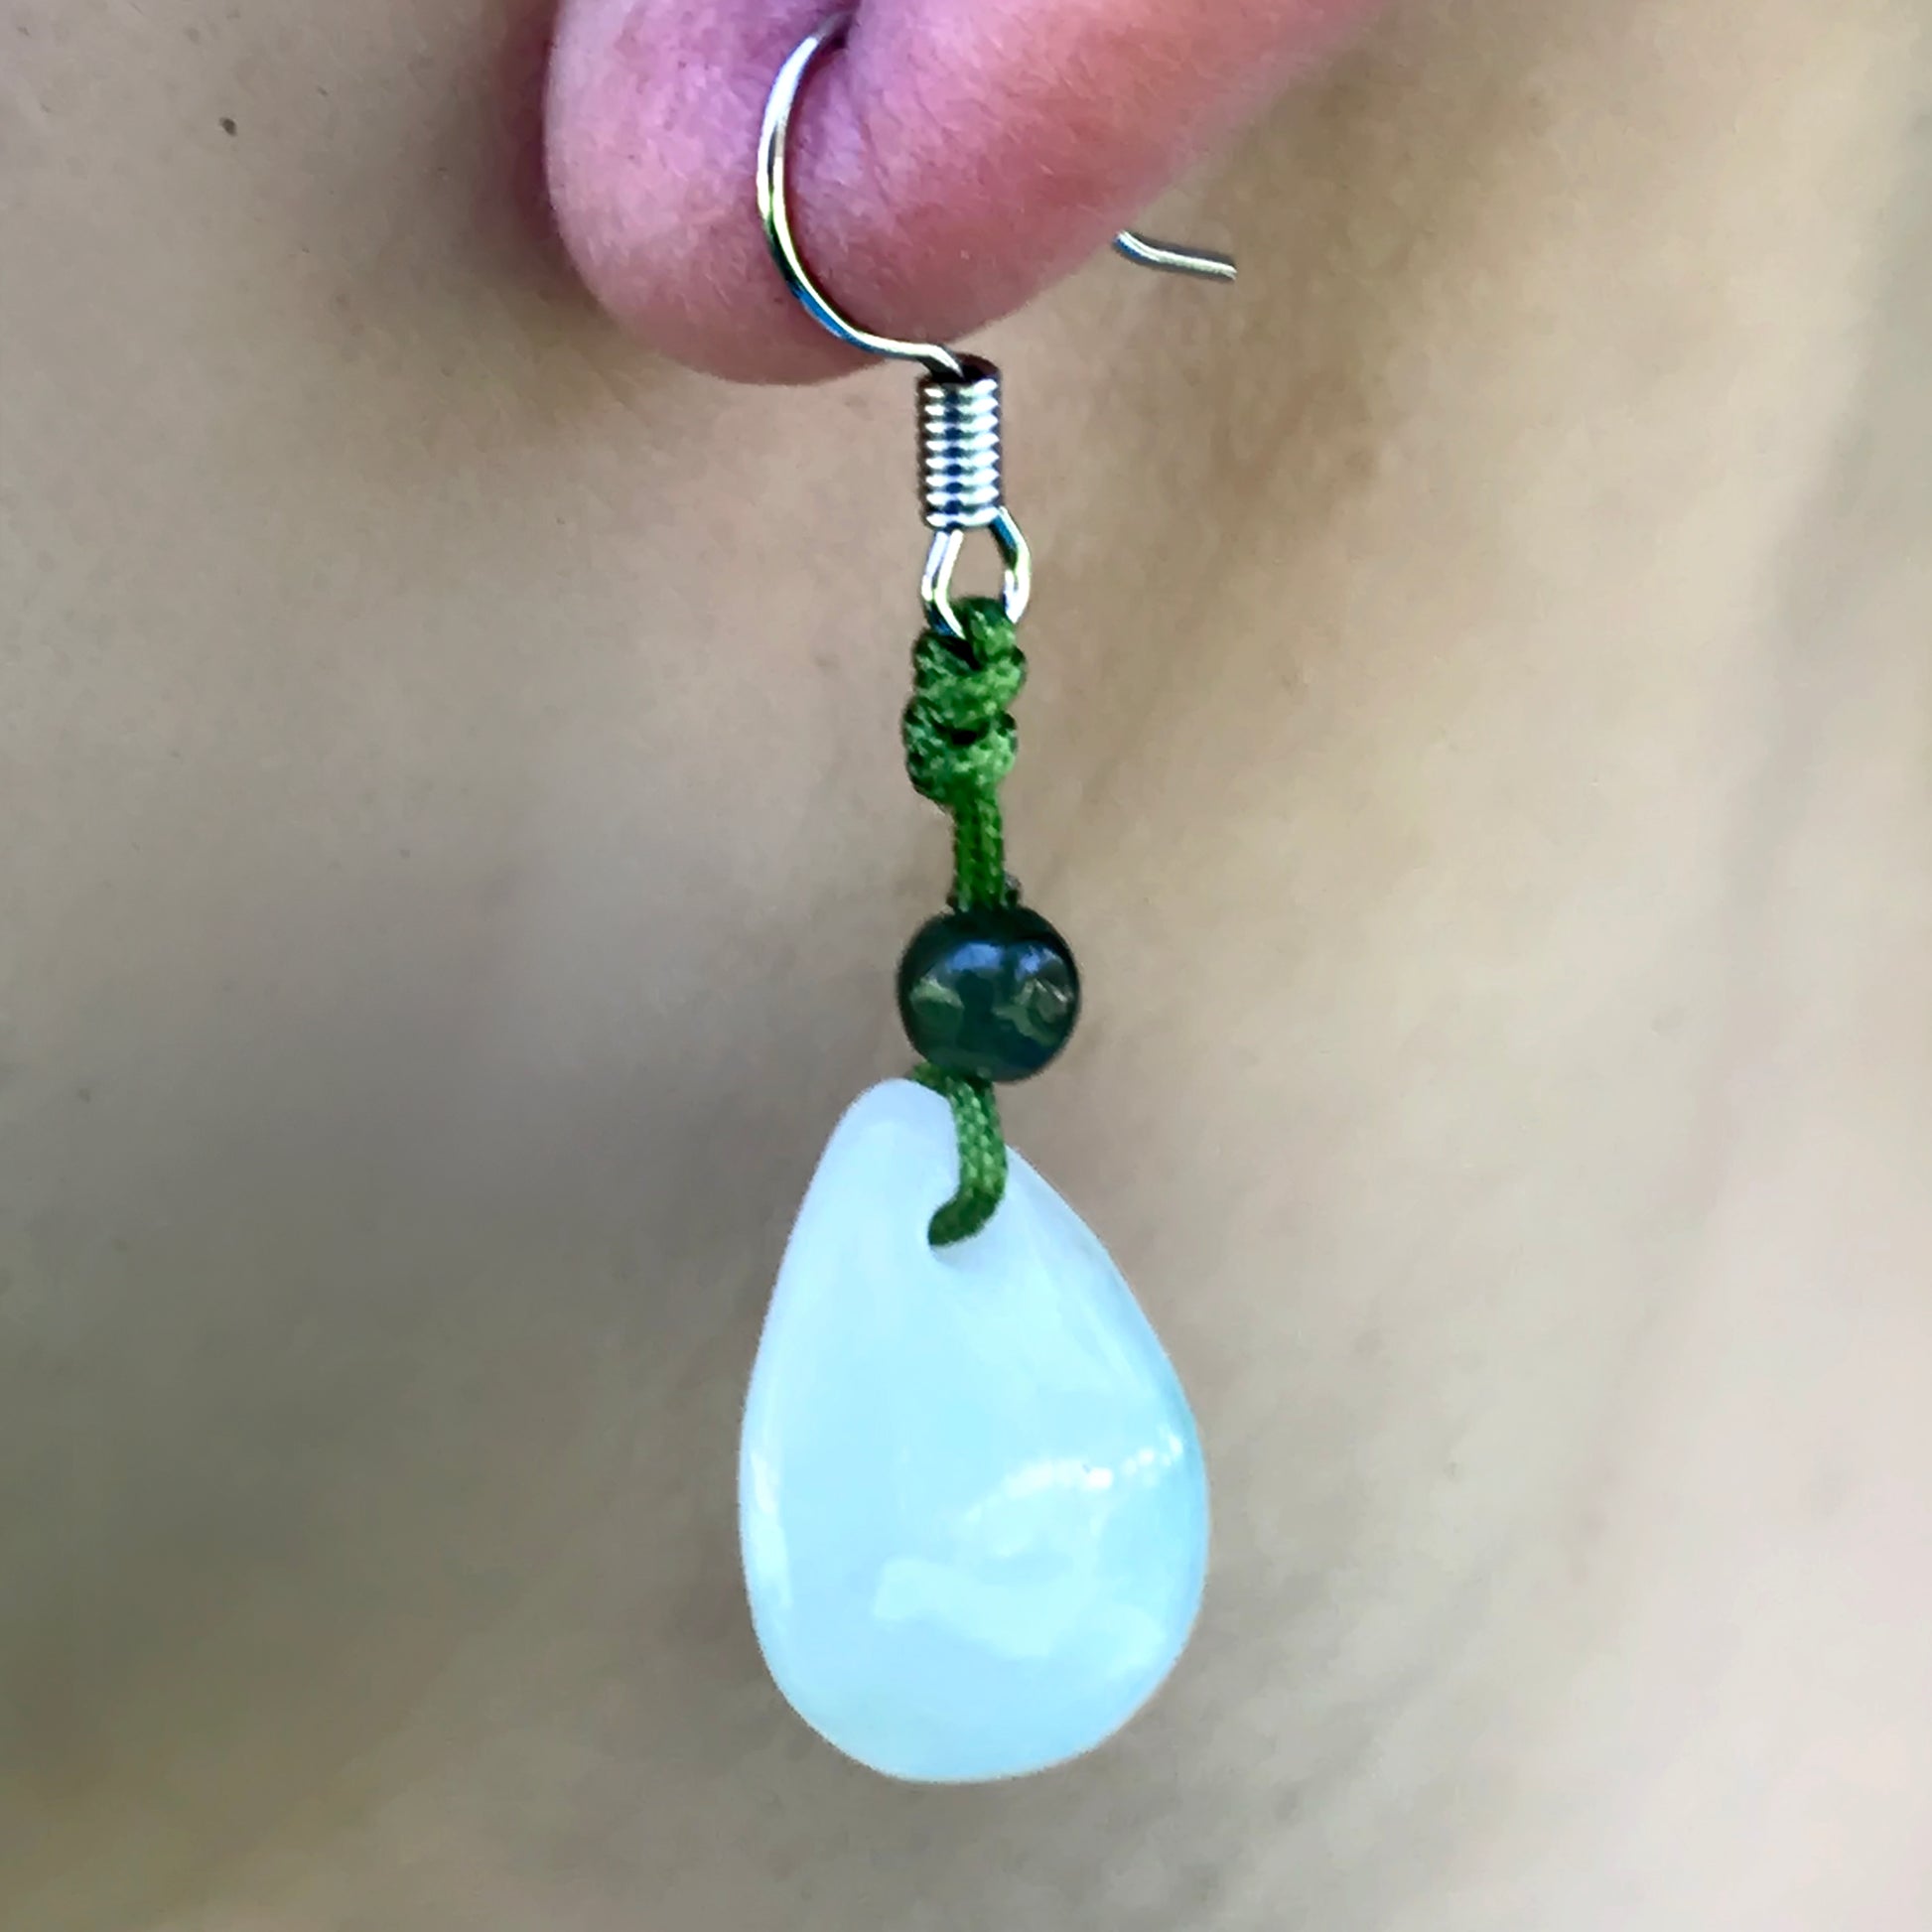 Feel Sensational with these Rain Drop Handmade Jade Earrings made with Lime Cord